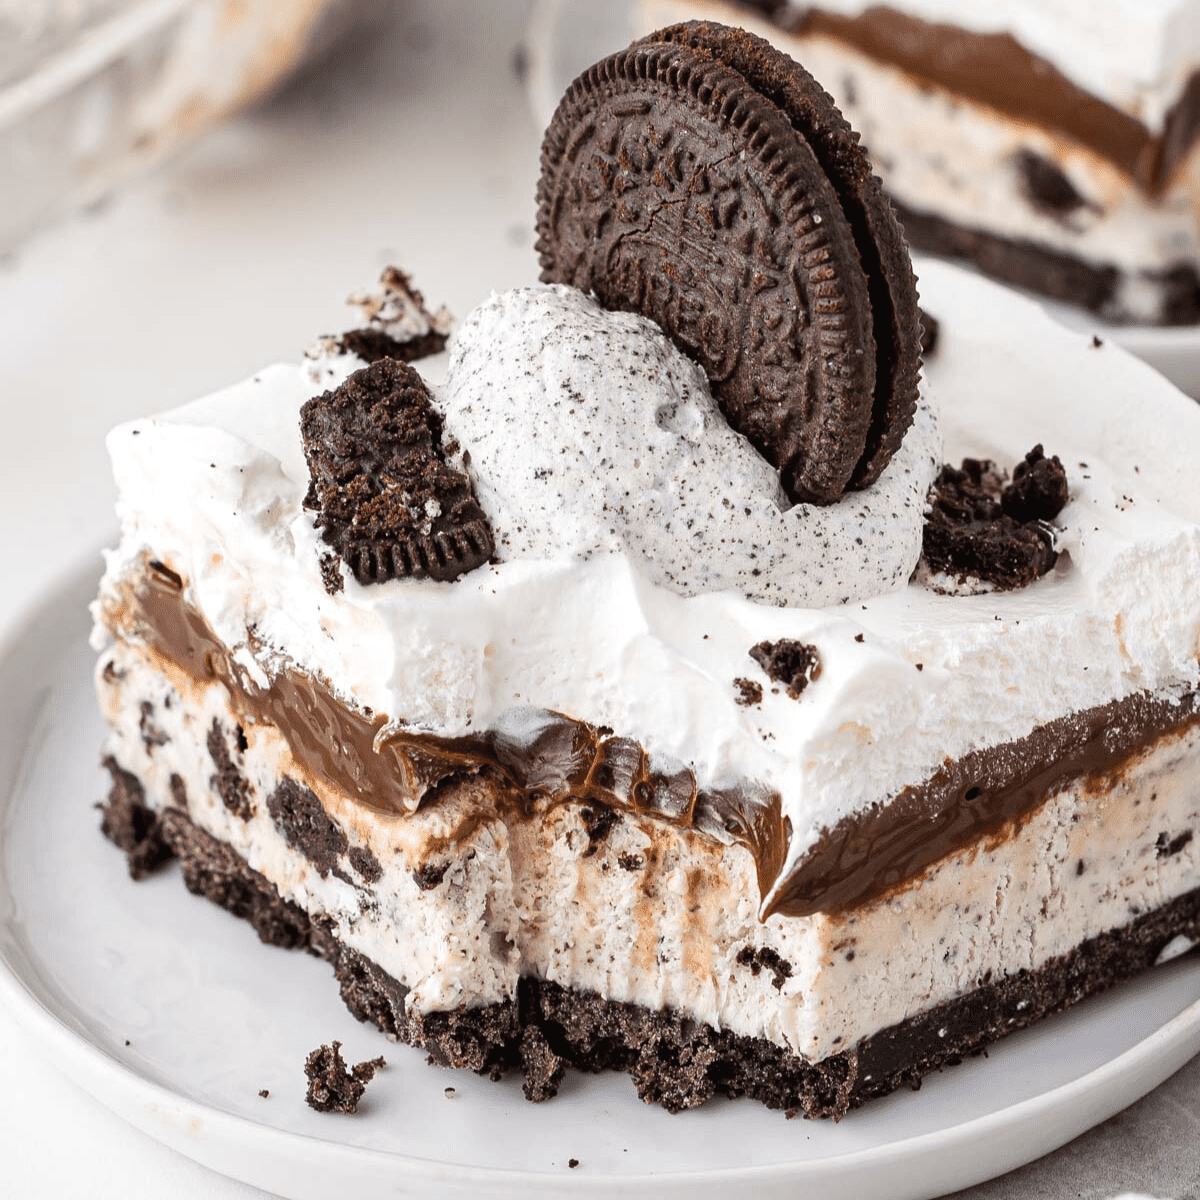 Oreo Ice Cream Cake {Just 5 Ingredients!}